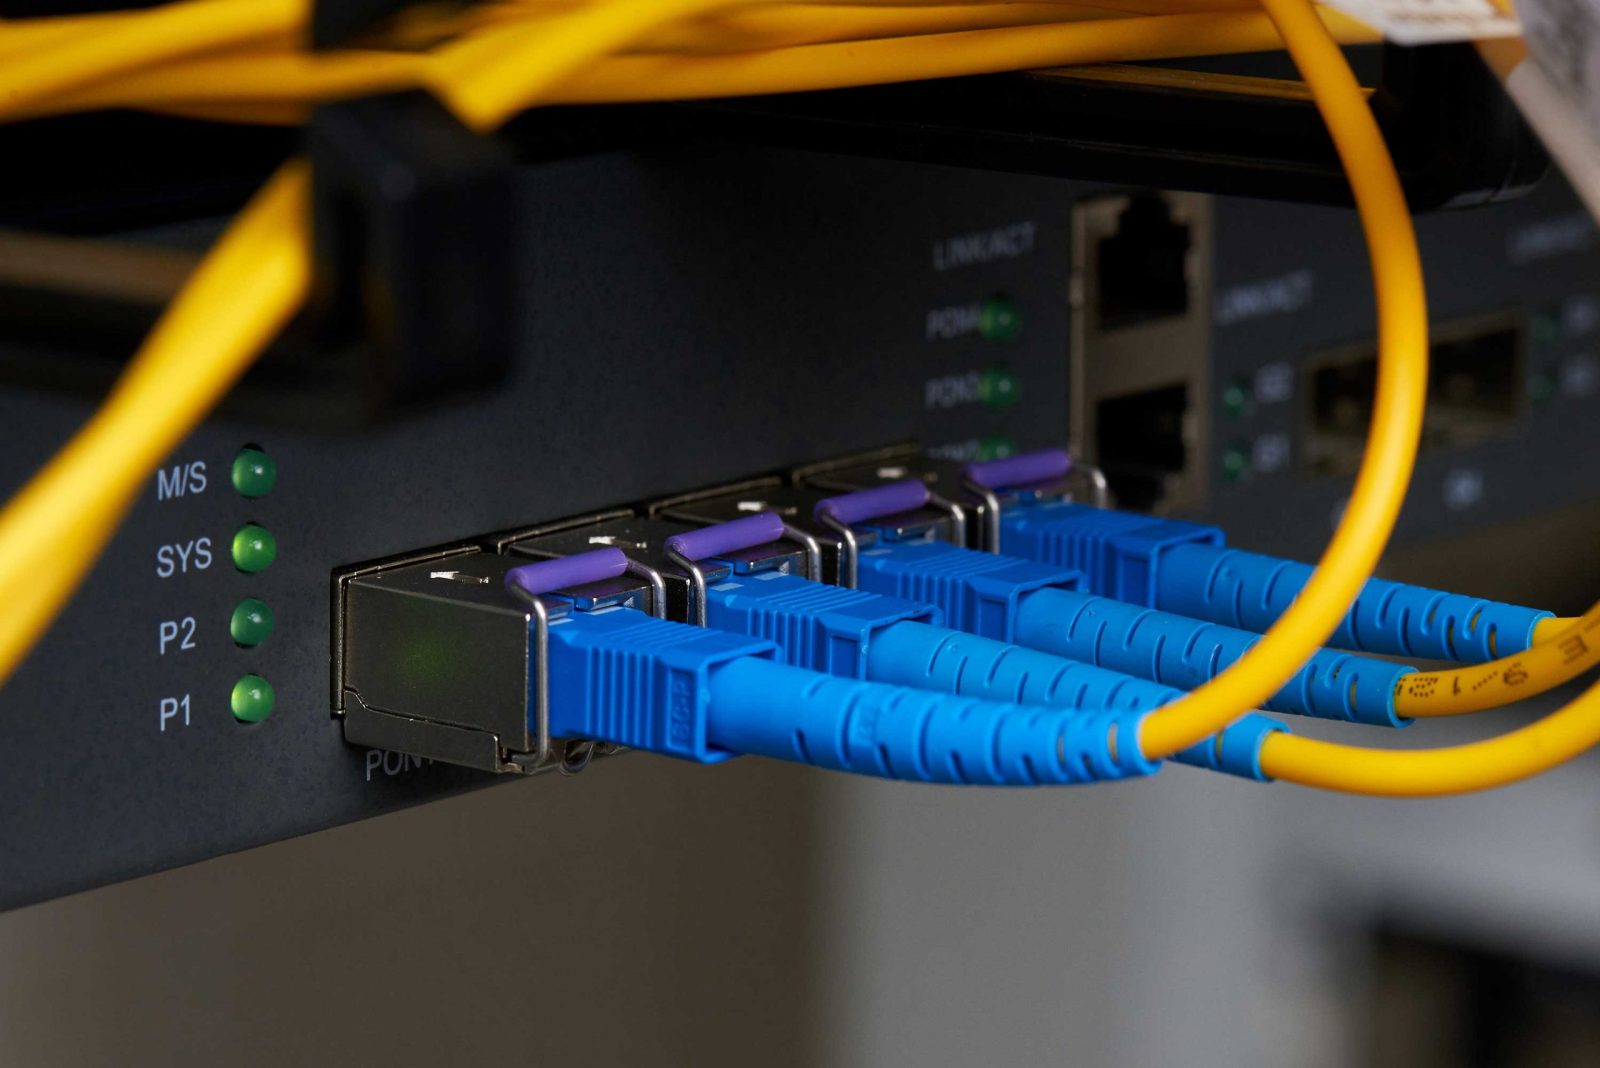 Internet service provider communications equipment